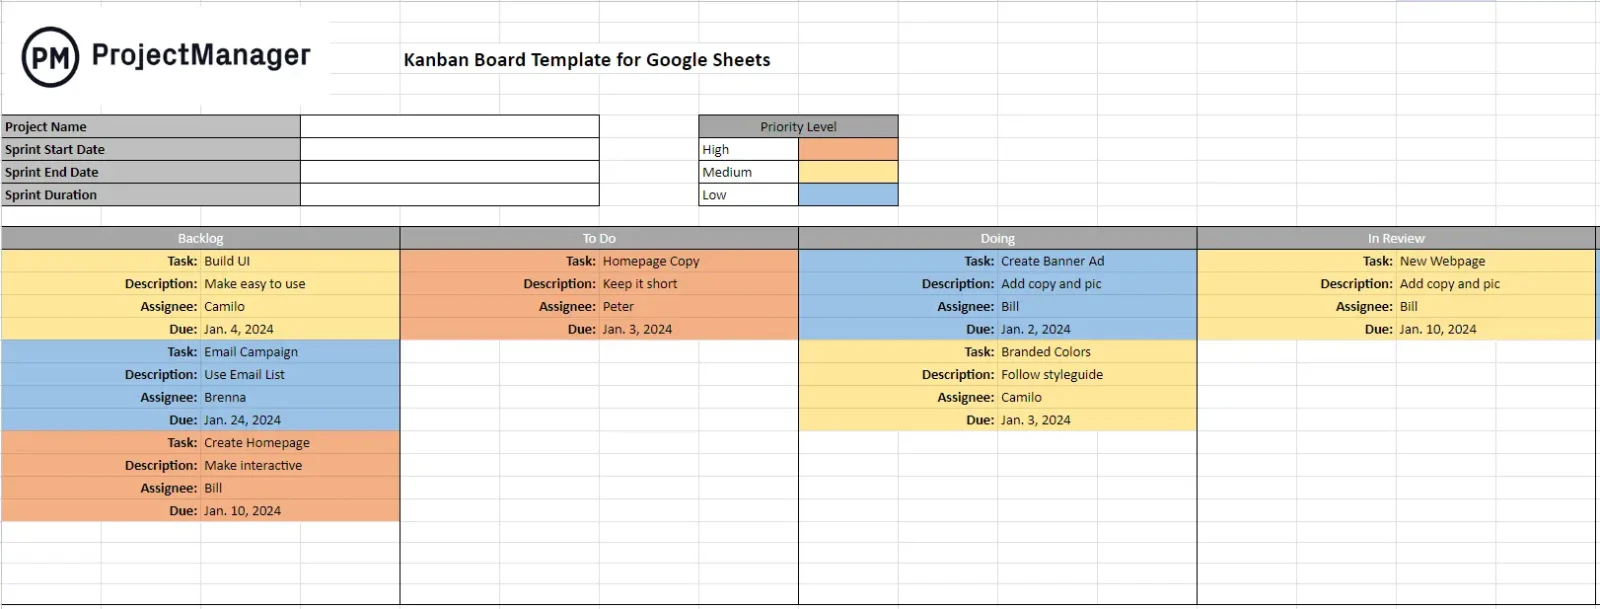 kanban board template for Google Sheets